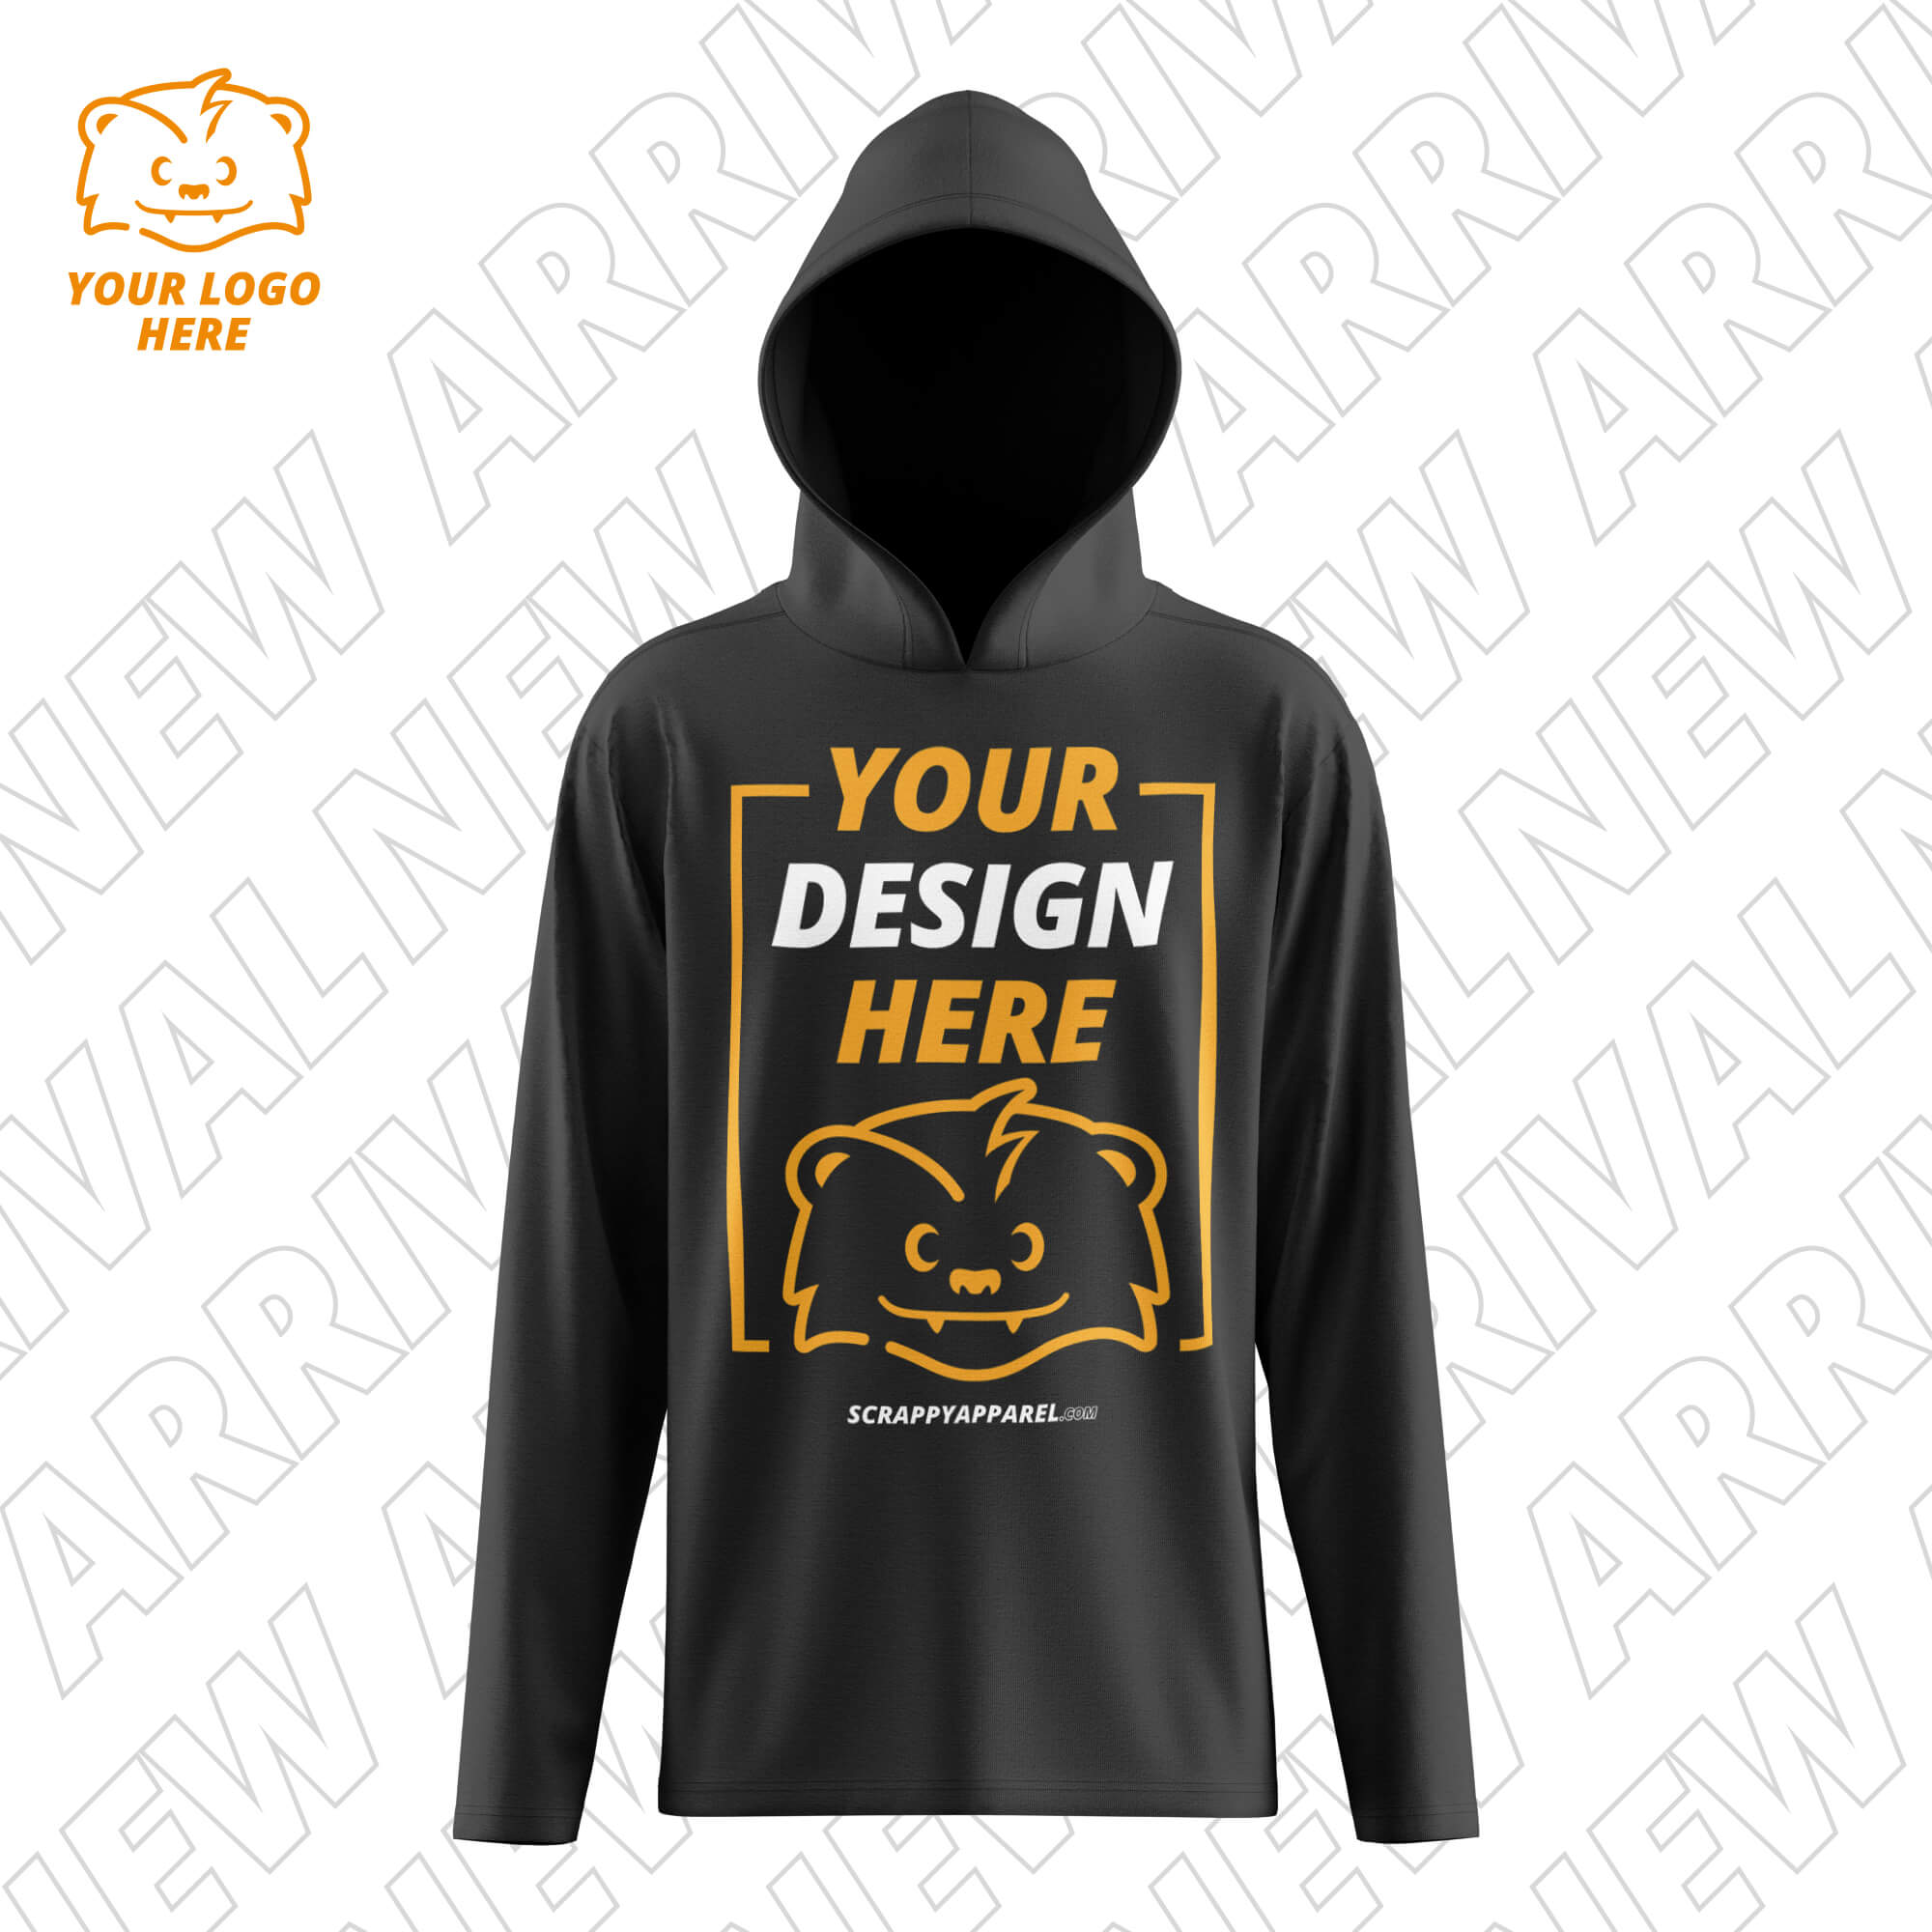 Create custom hoodies and apparel